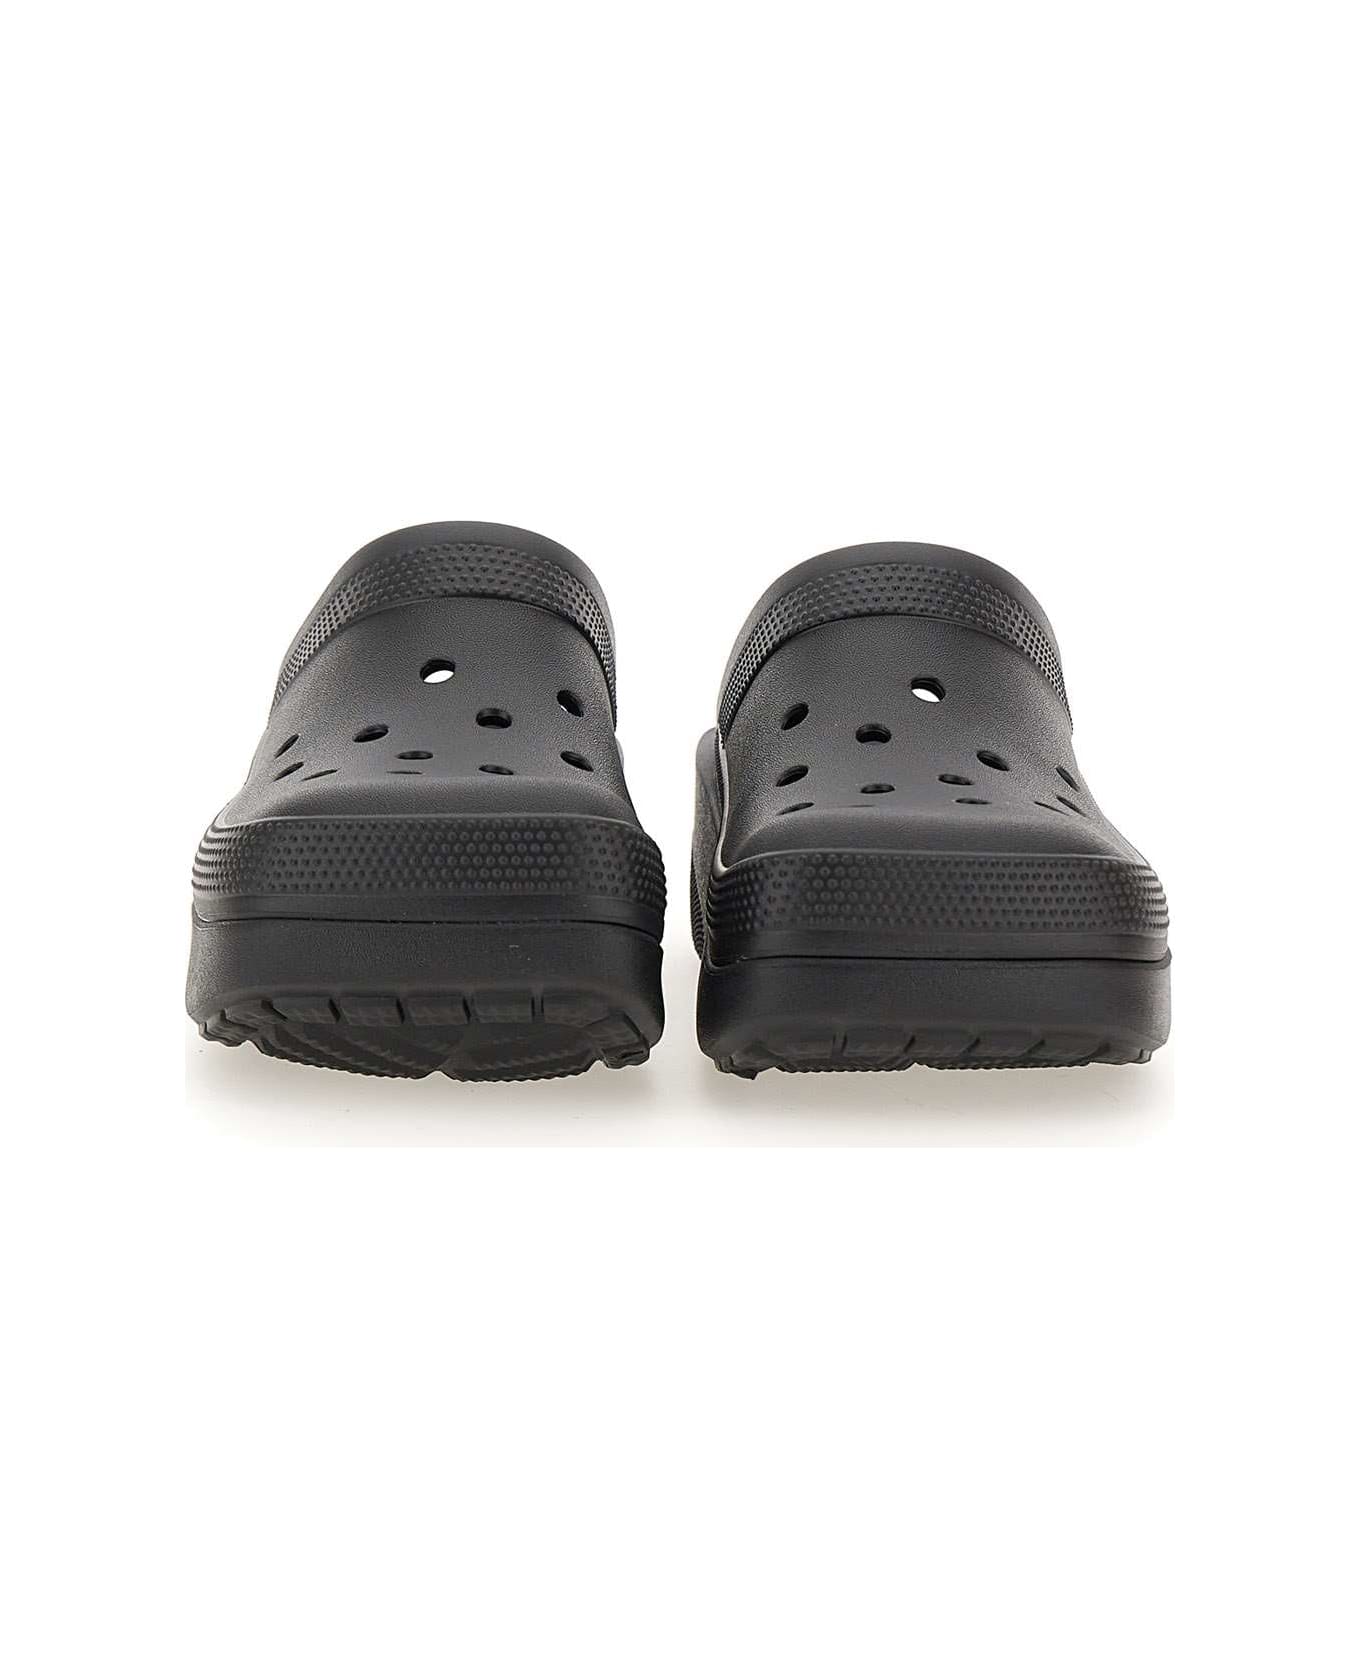 Crocs 'classic Blunt Toe' Slippers - Black フラットシューズ